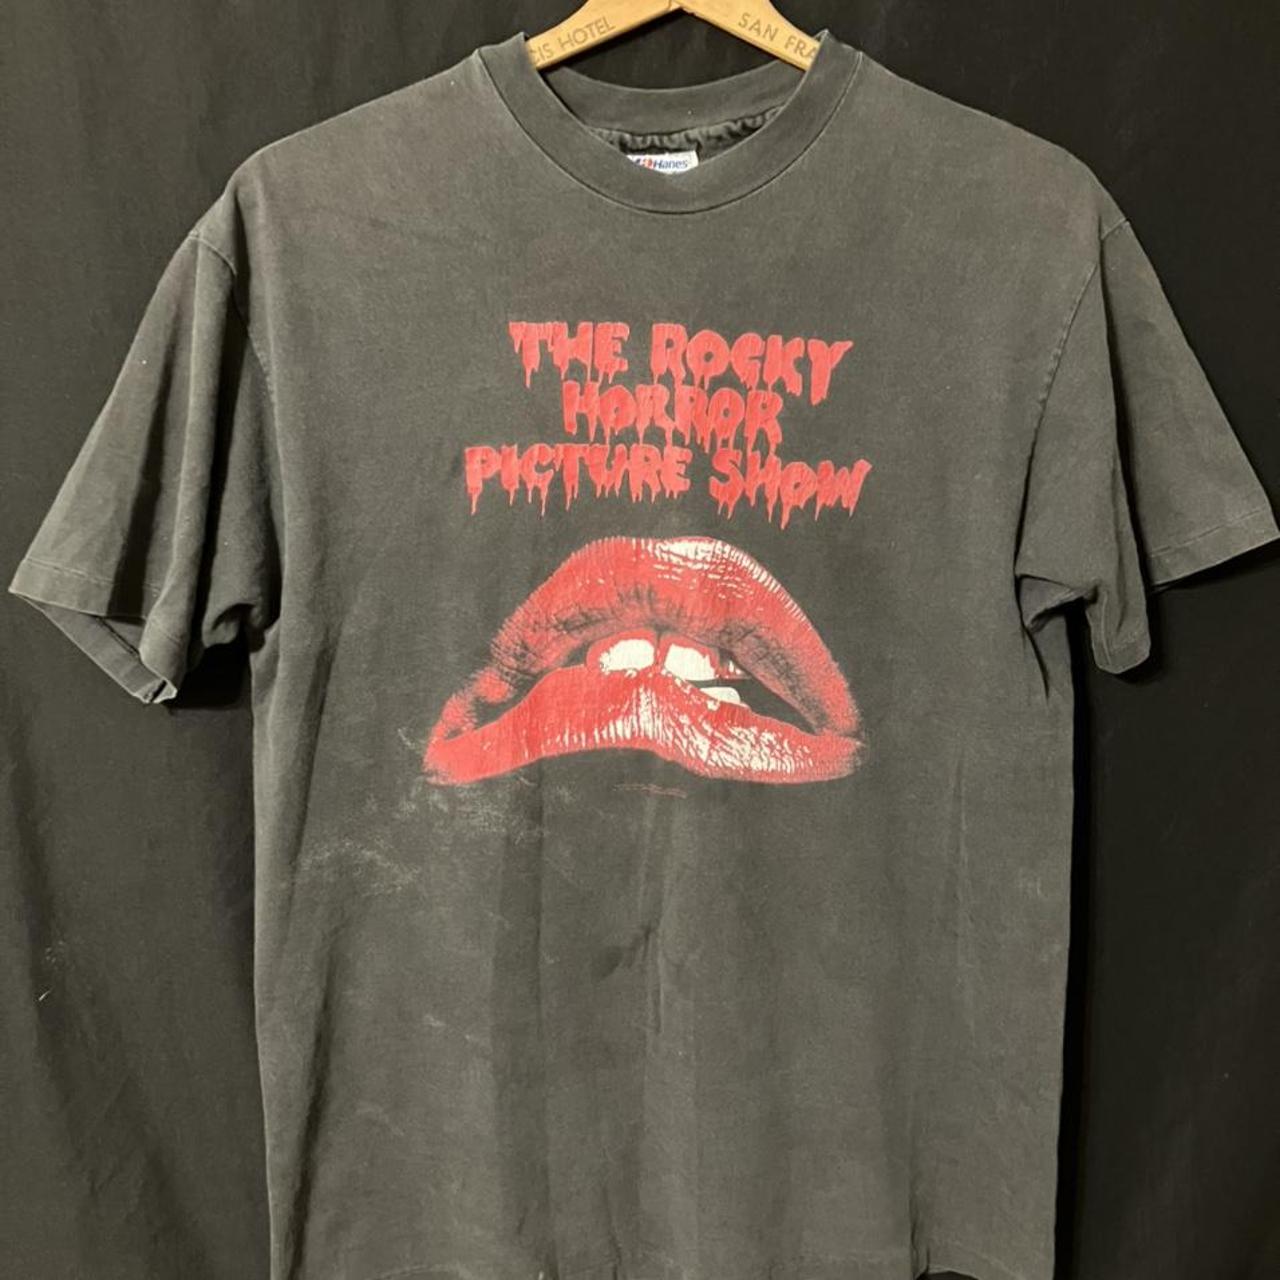 Vintage rocky horror picture show t shirt single